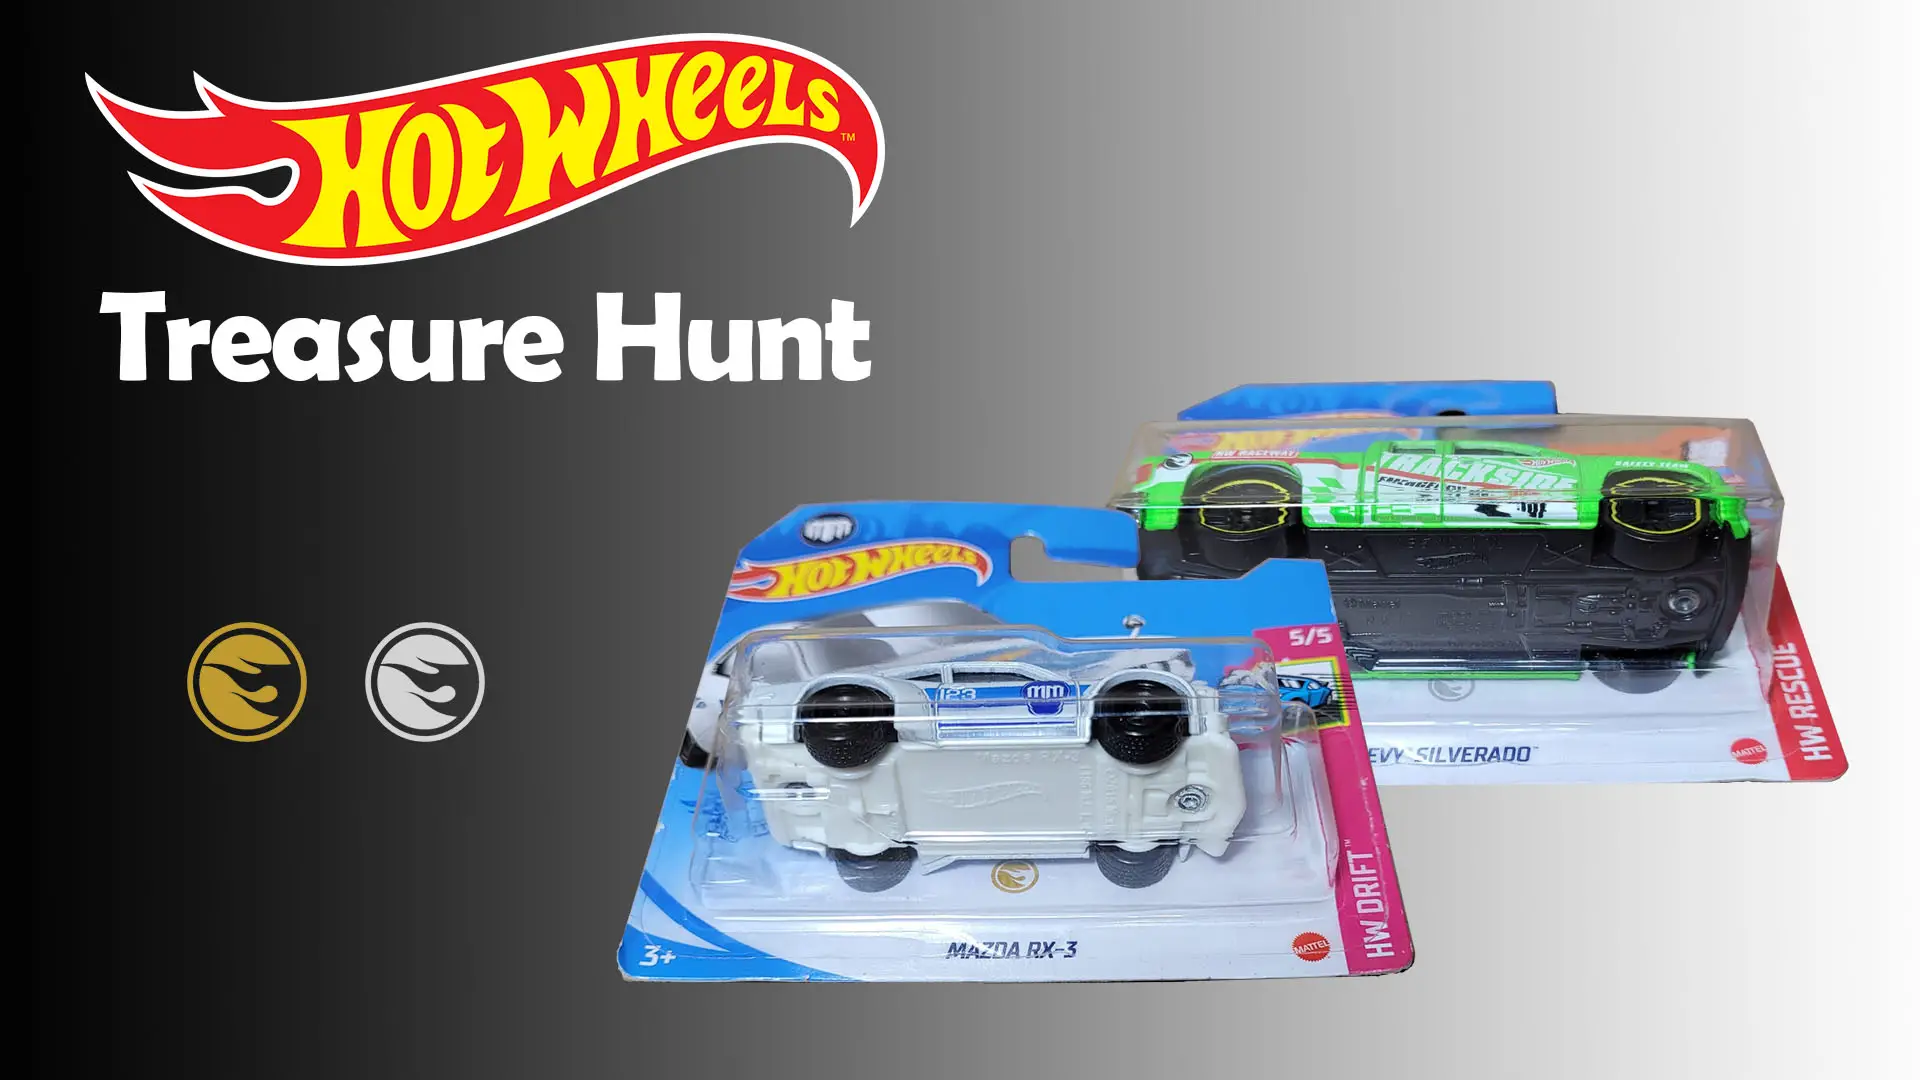 o que é hot wheels sth? What is hot wheels treasure hunt?